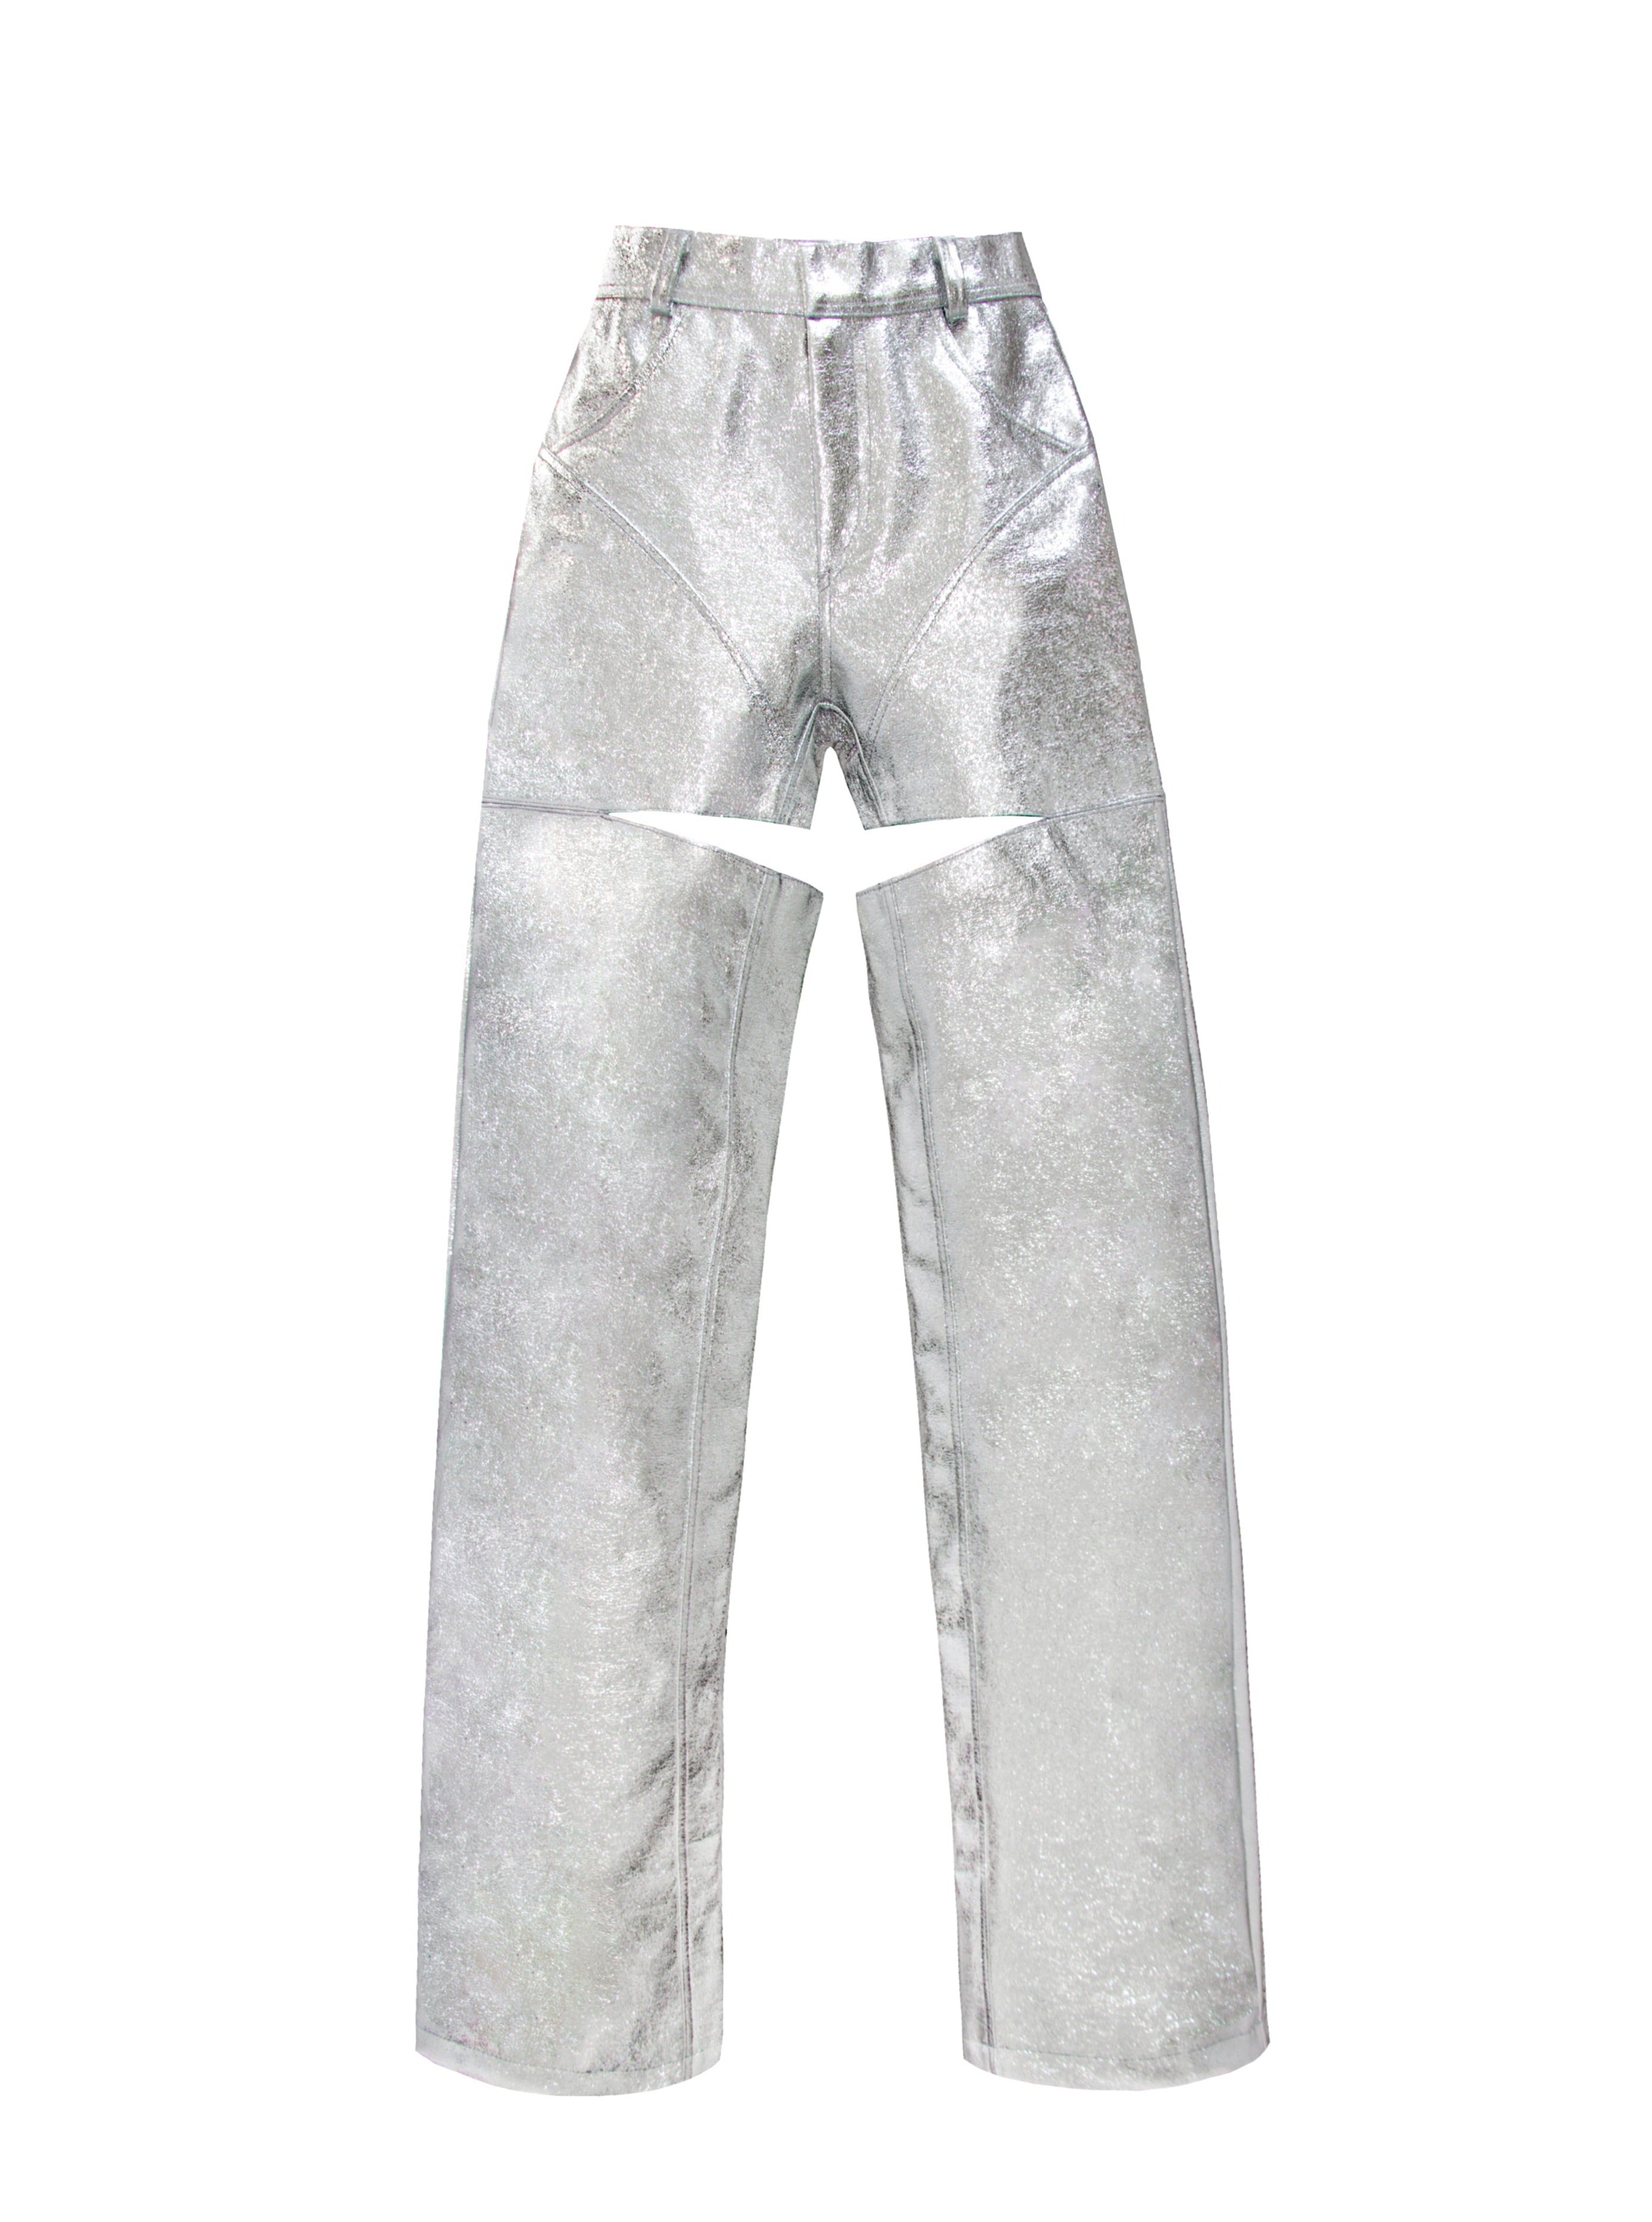 Silver Vinyl Leather Pants